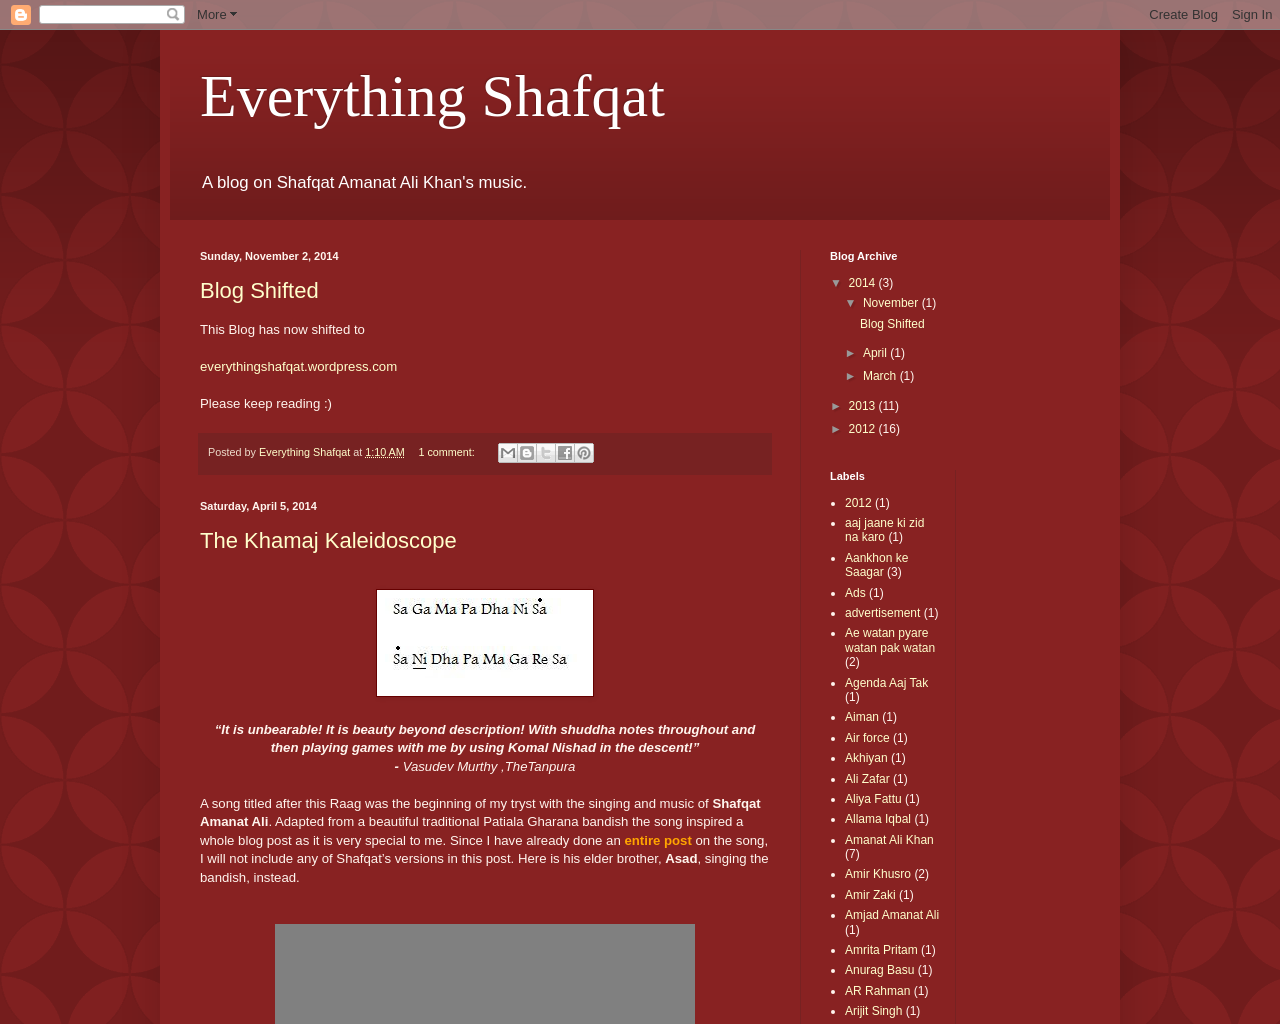 Everything Shafqat- A blog on Shafqat Amanat Ali's music